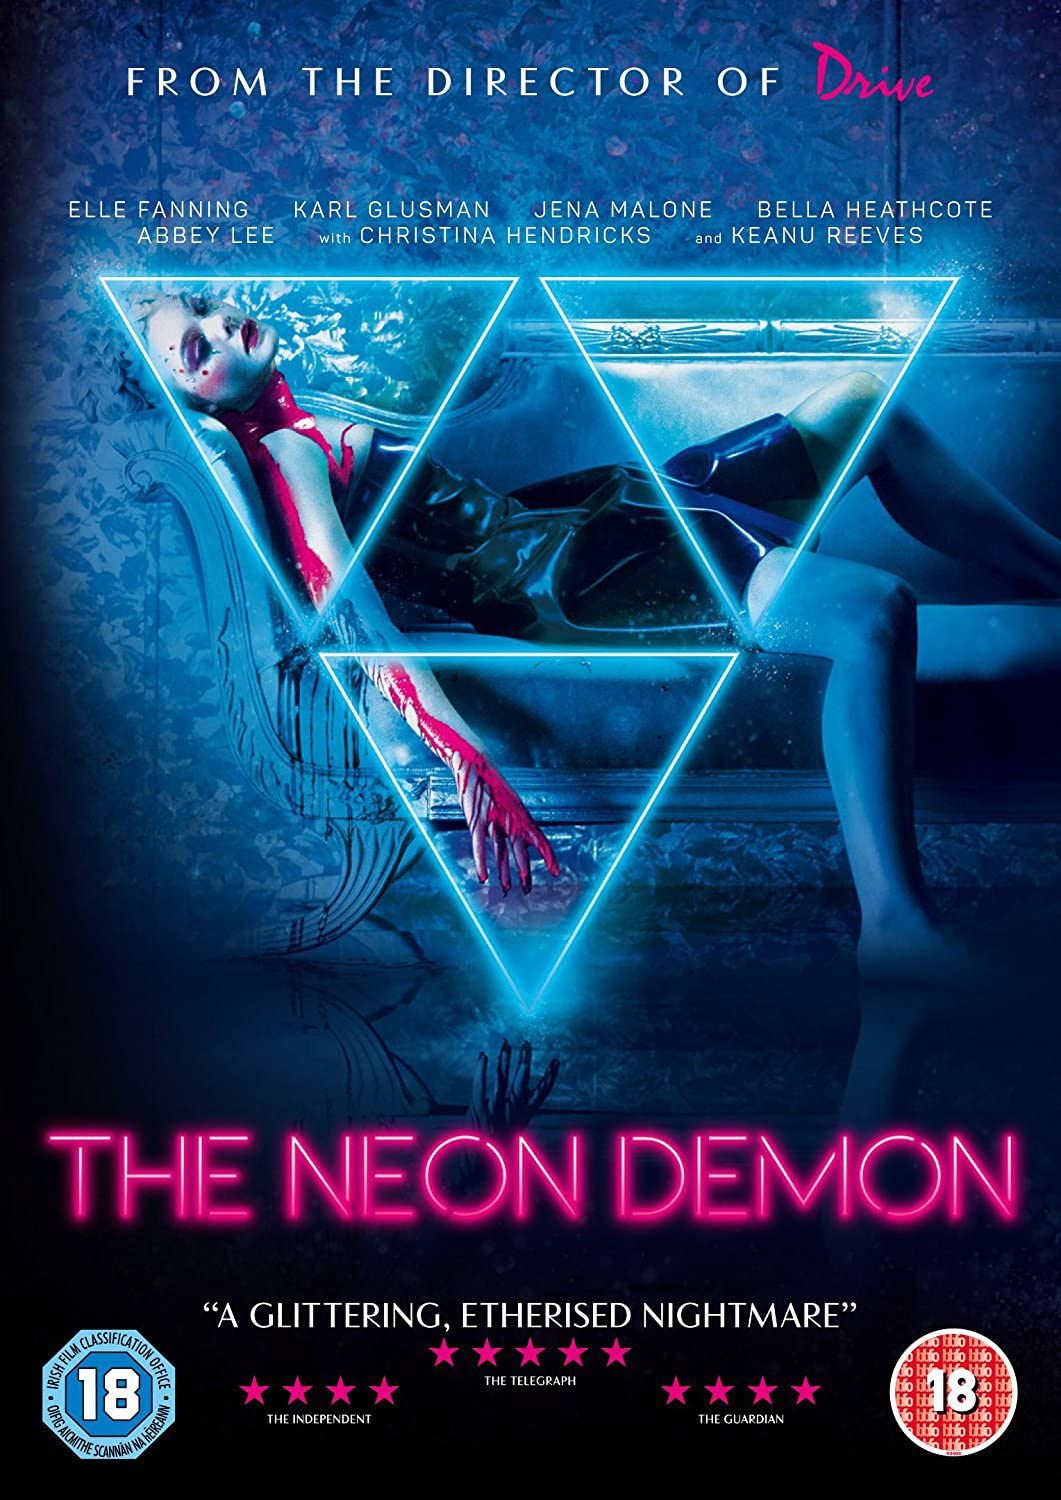 The Neon Demon [2017] - Horror/Thriller [DVD]